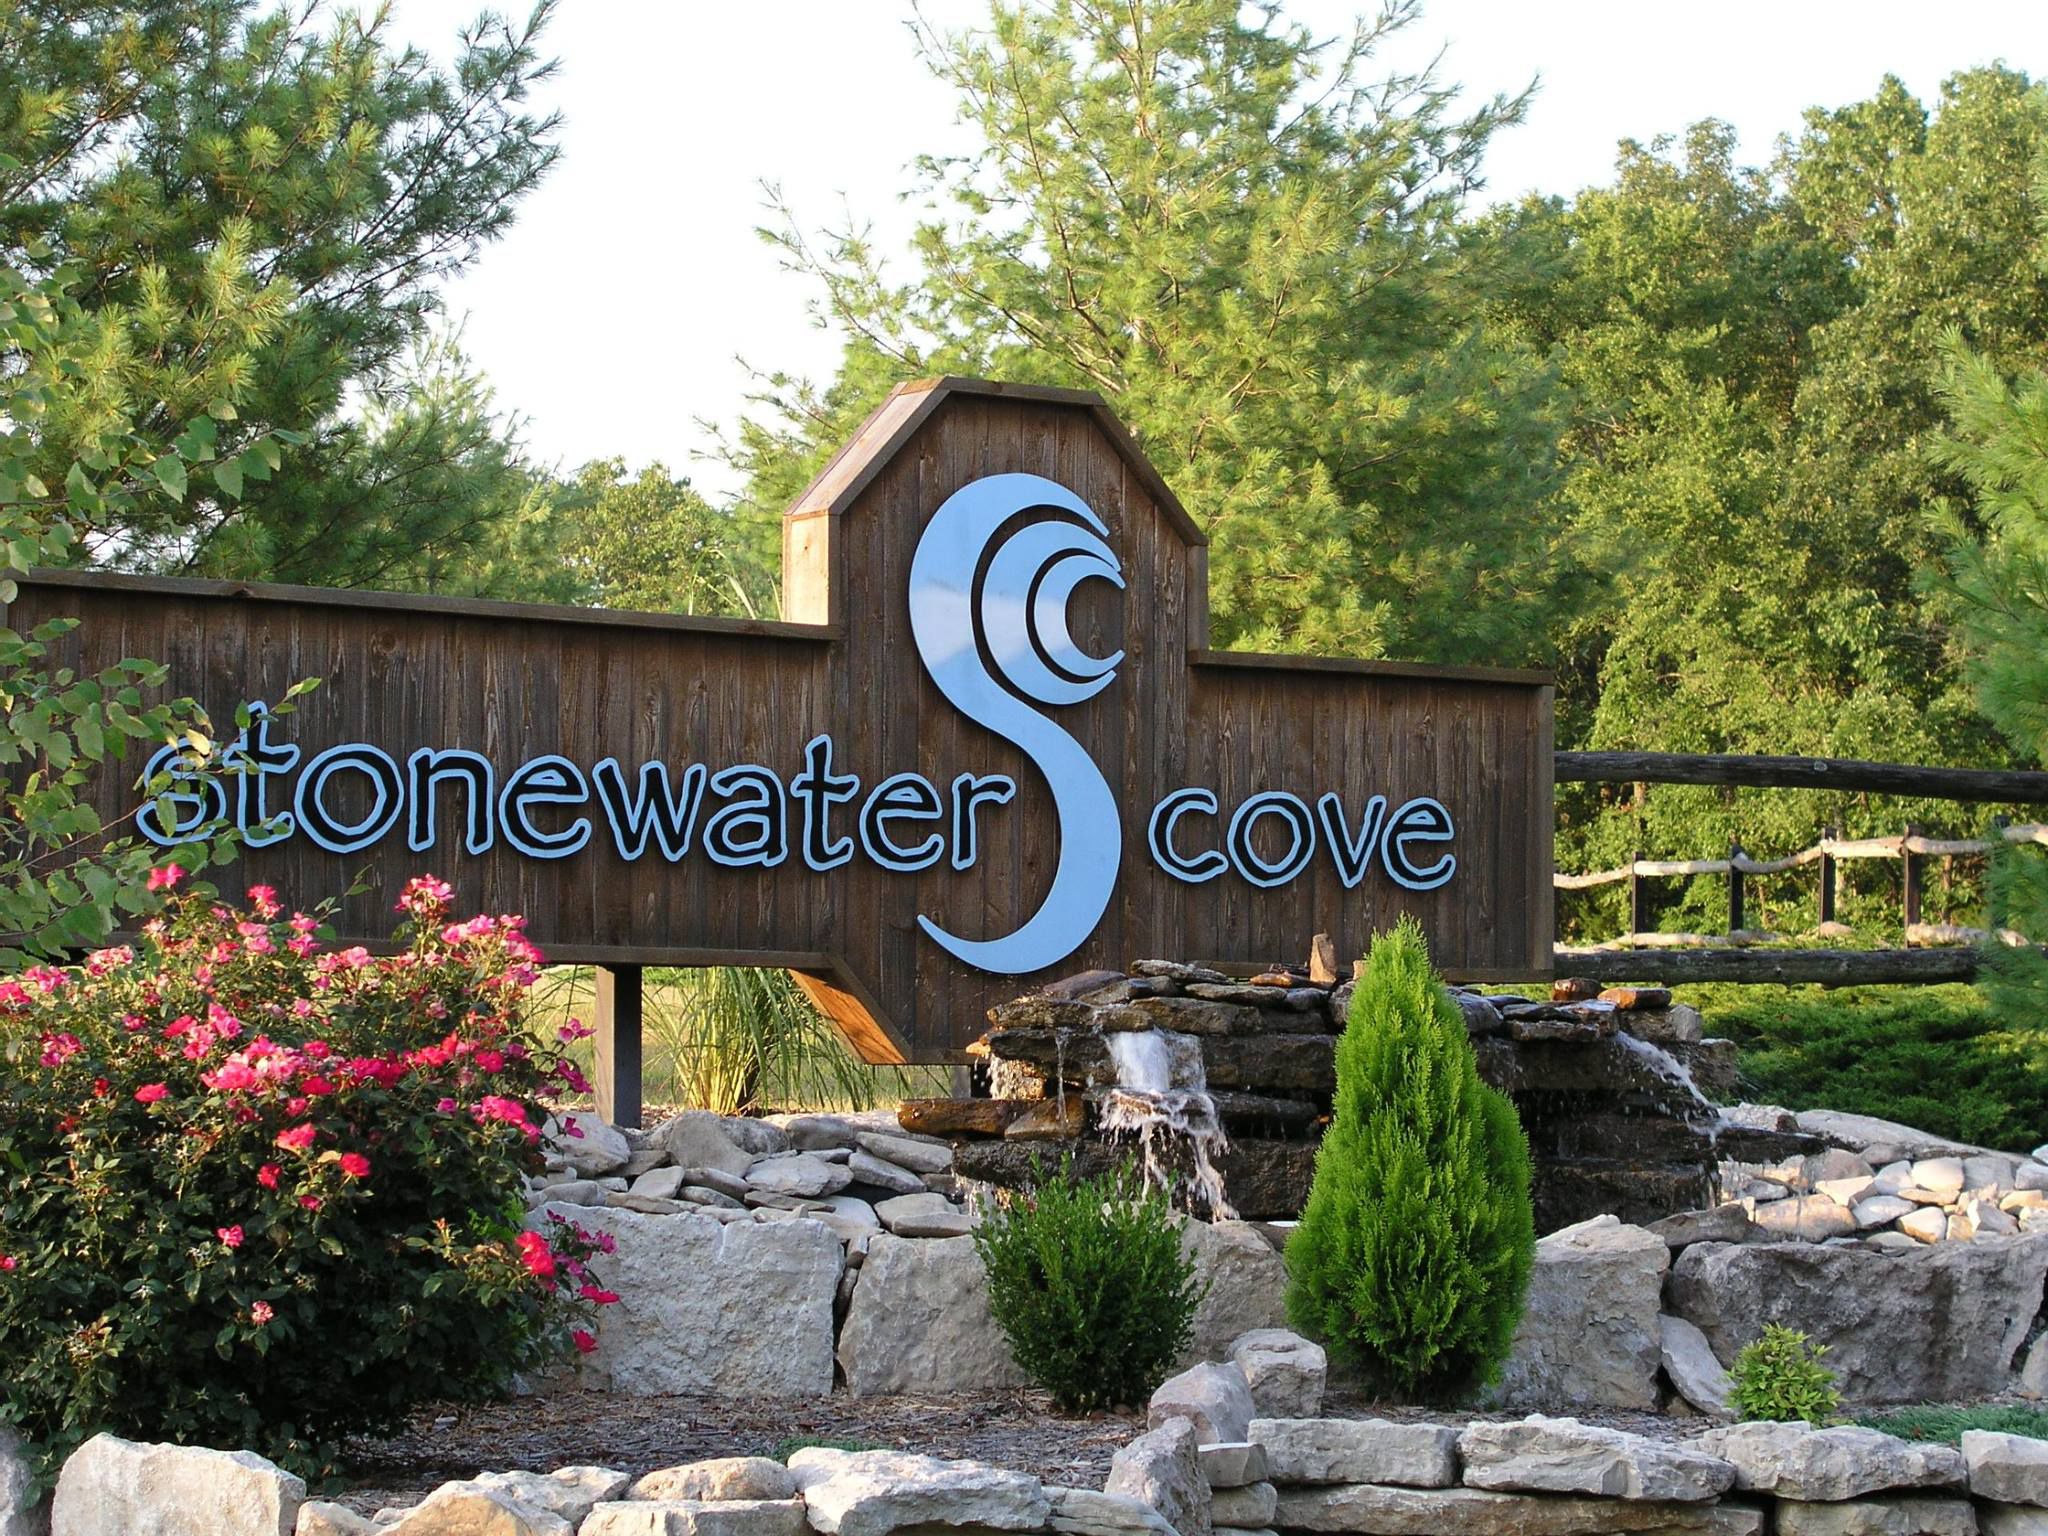 Stonewater cove